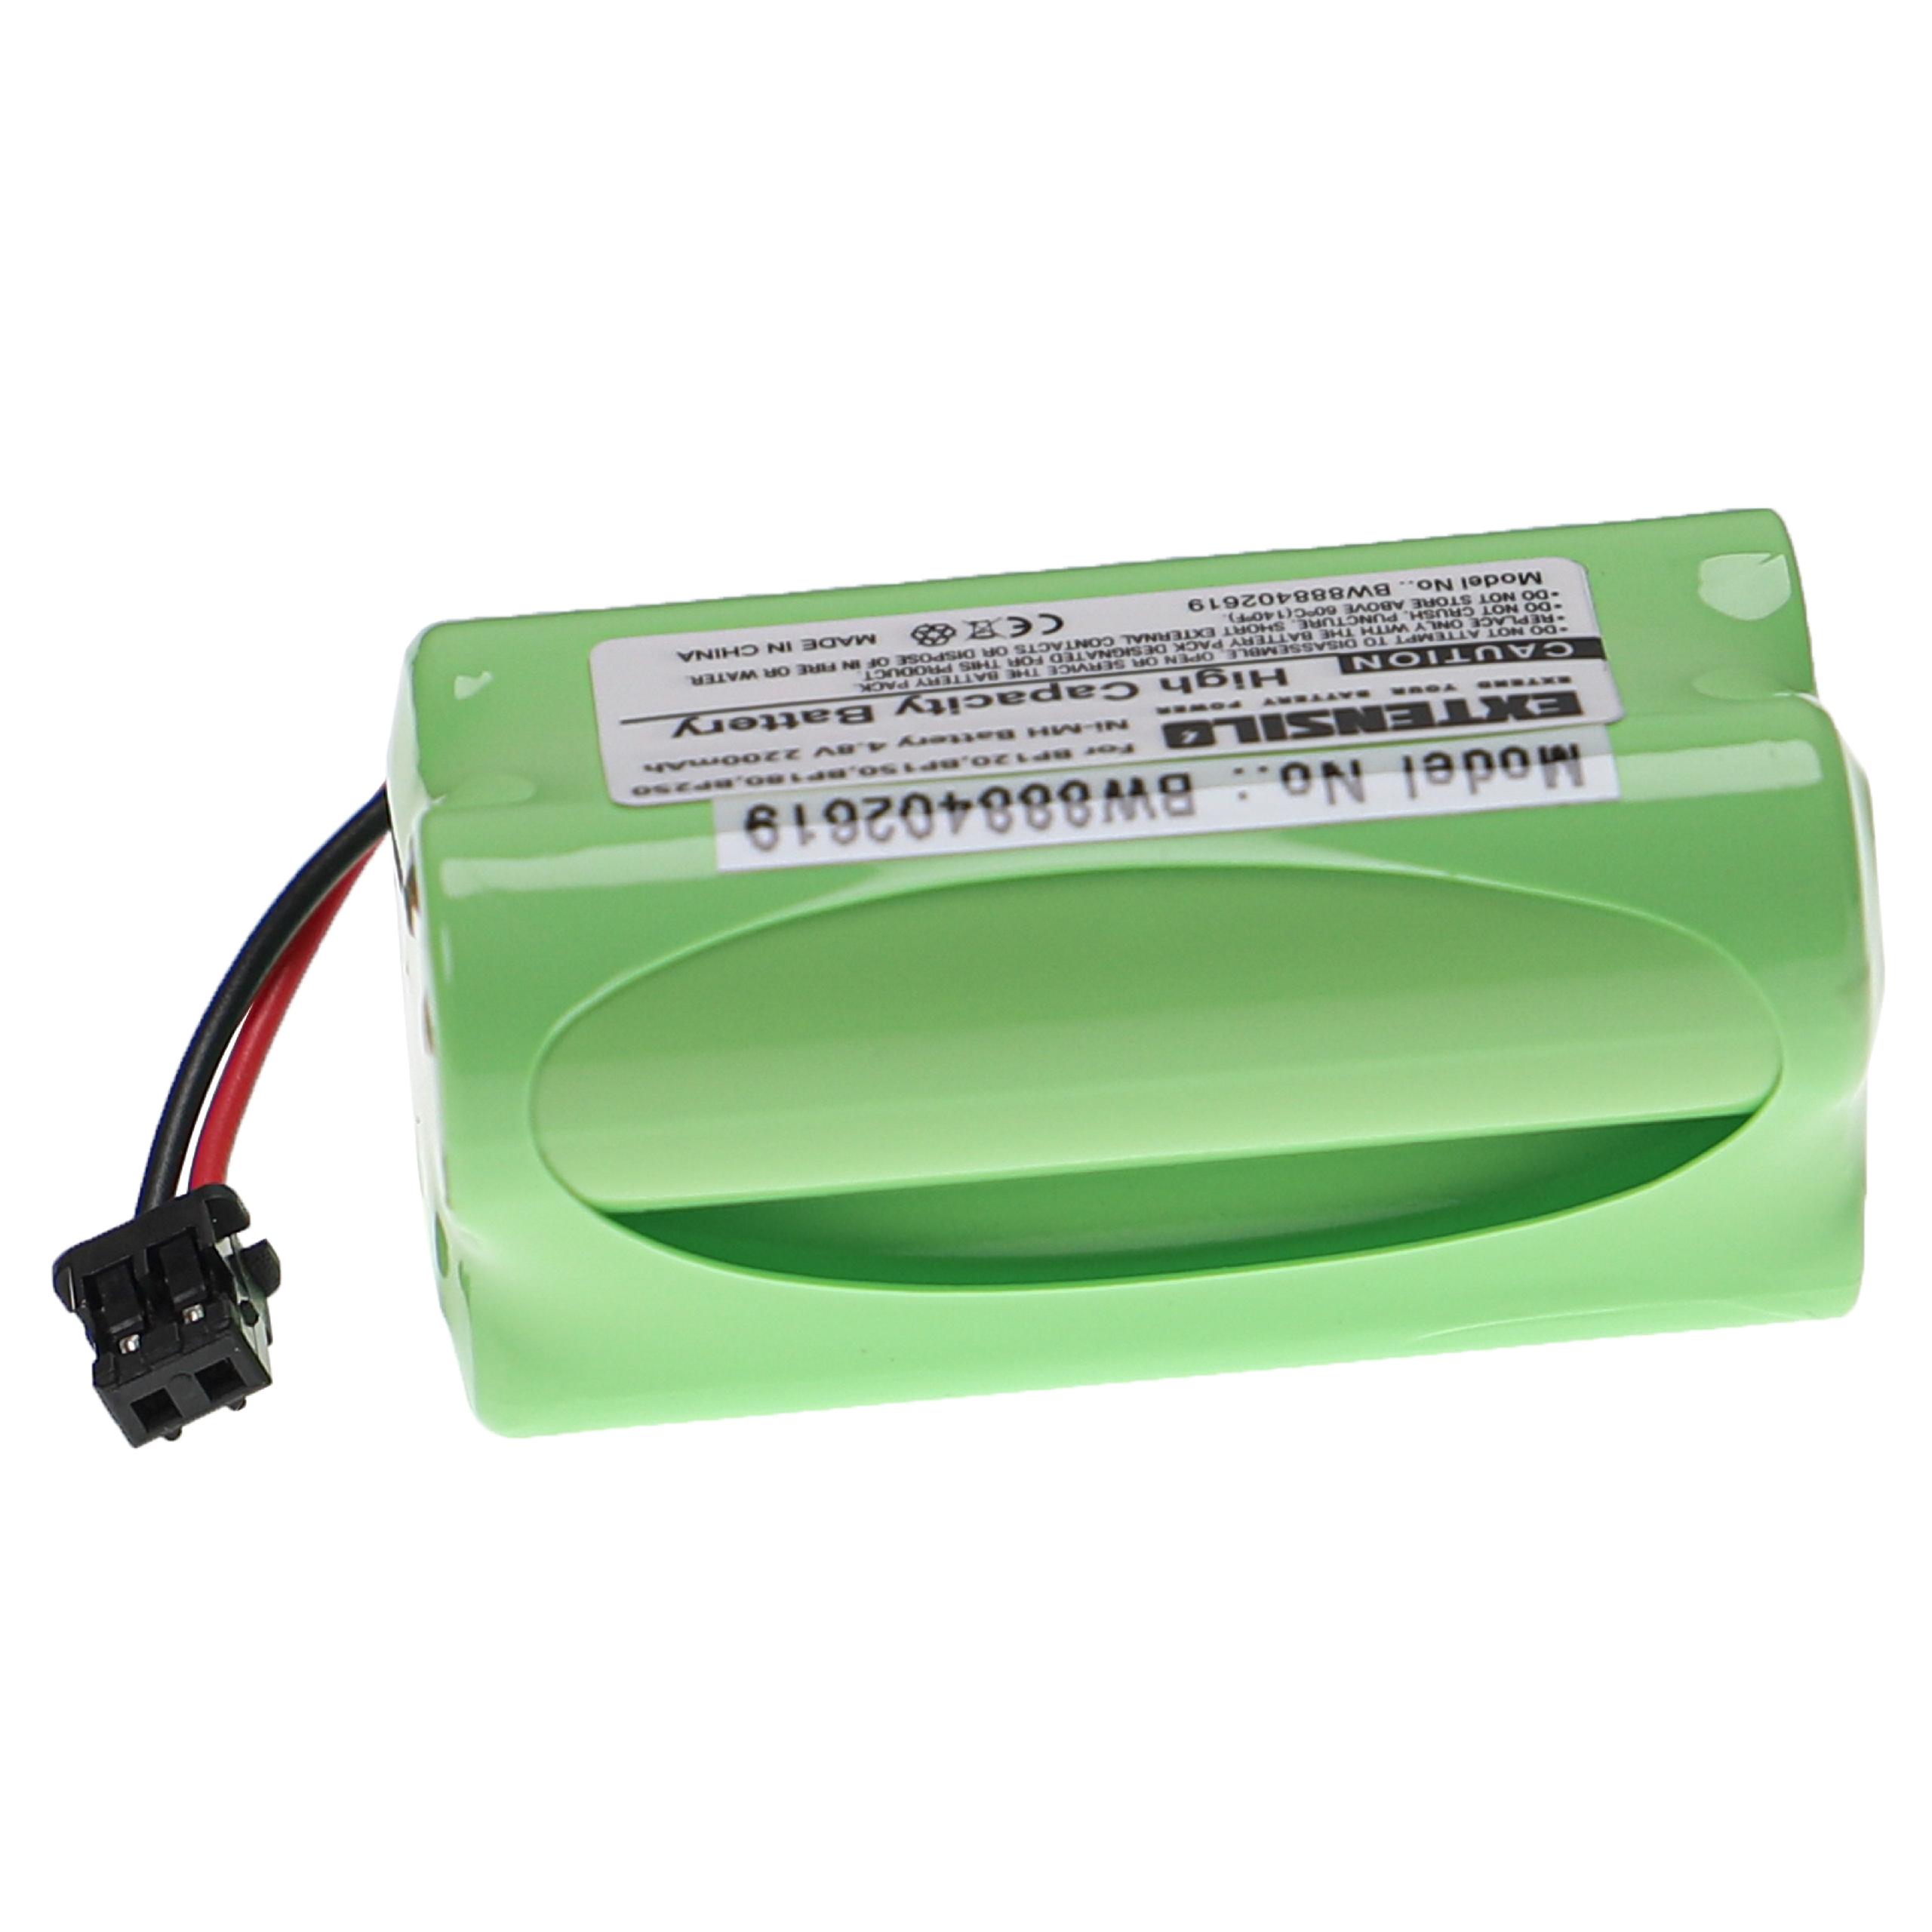 Batterie remplace BP120, BBTY0356001, BP180, BP150, BP250 pour radio talkie-walkie - 2200mAh 4,8V NiMH